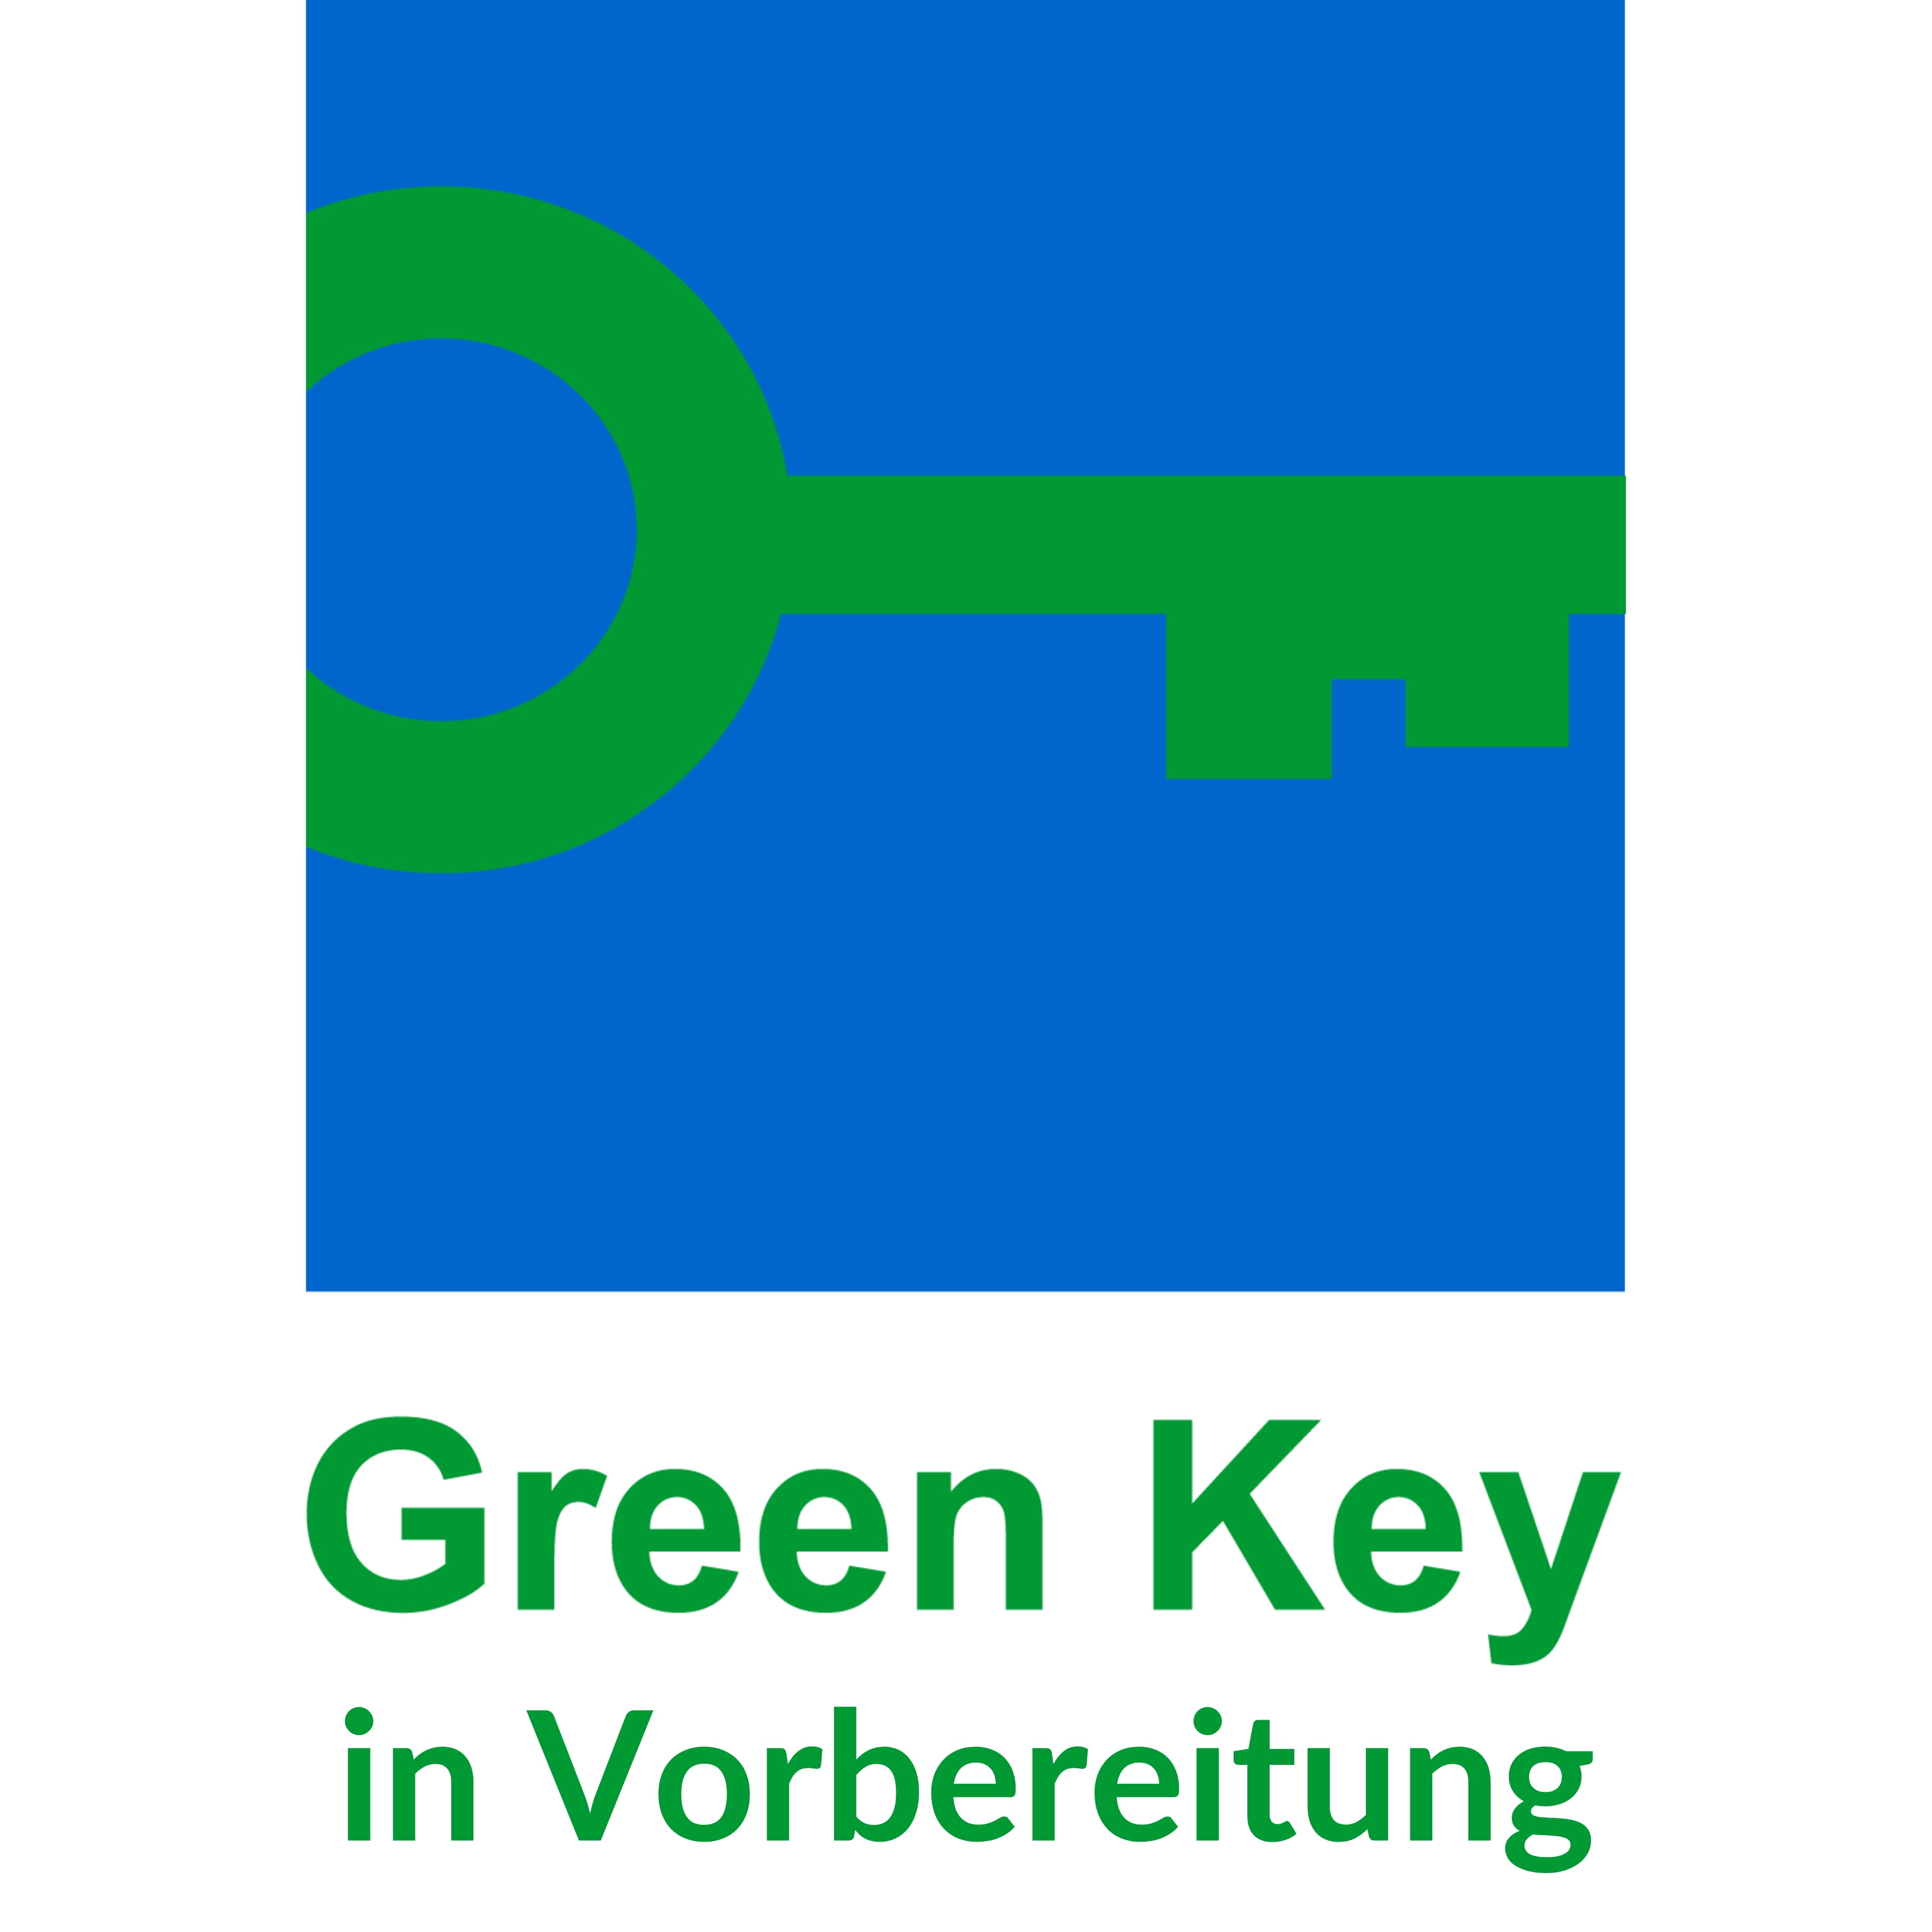 Green Key in Vorbereitung